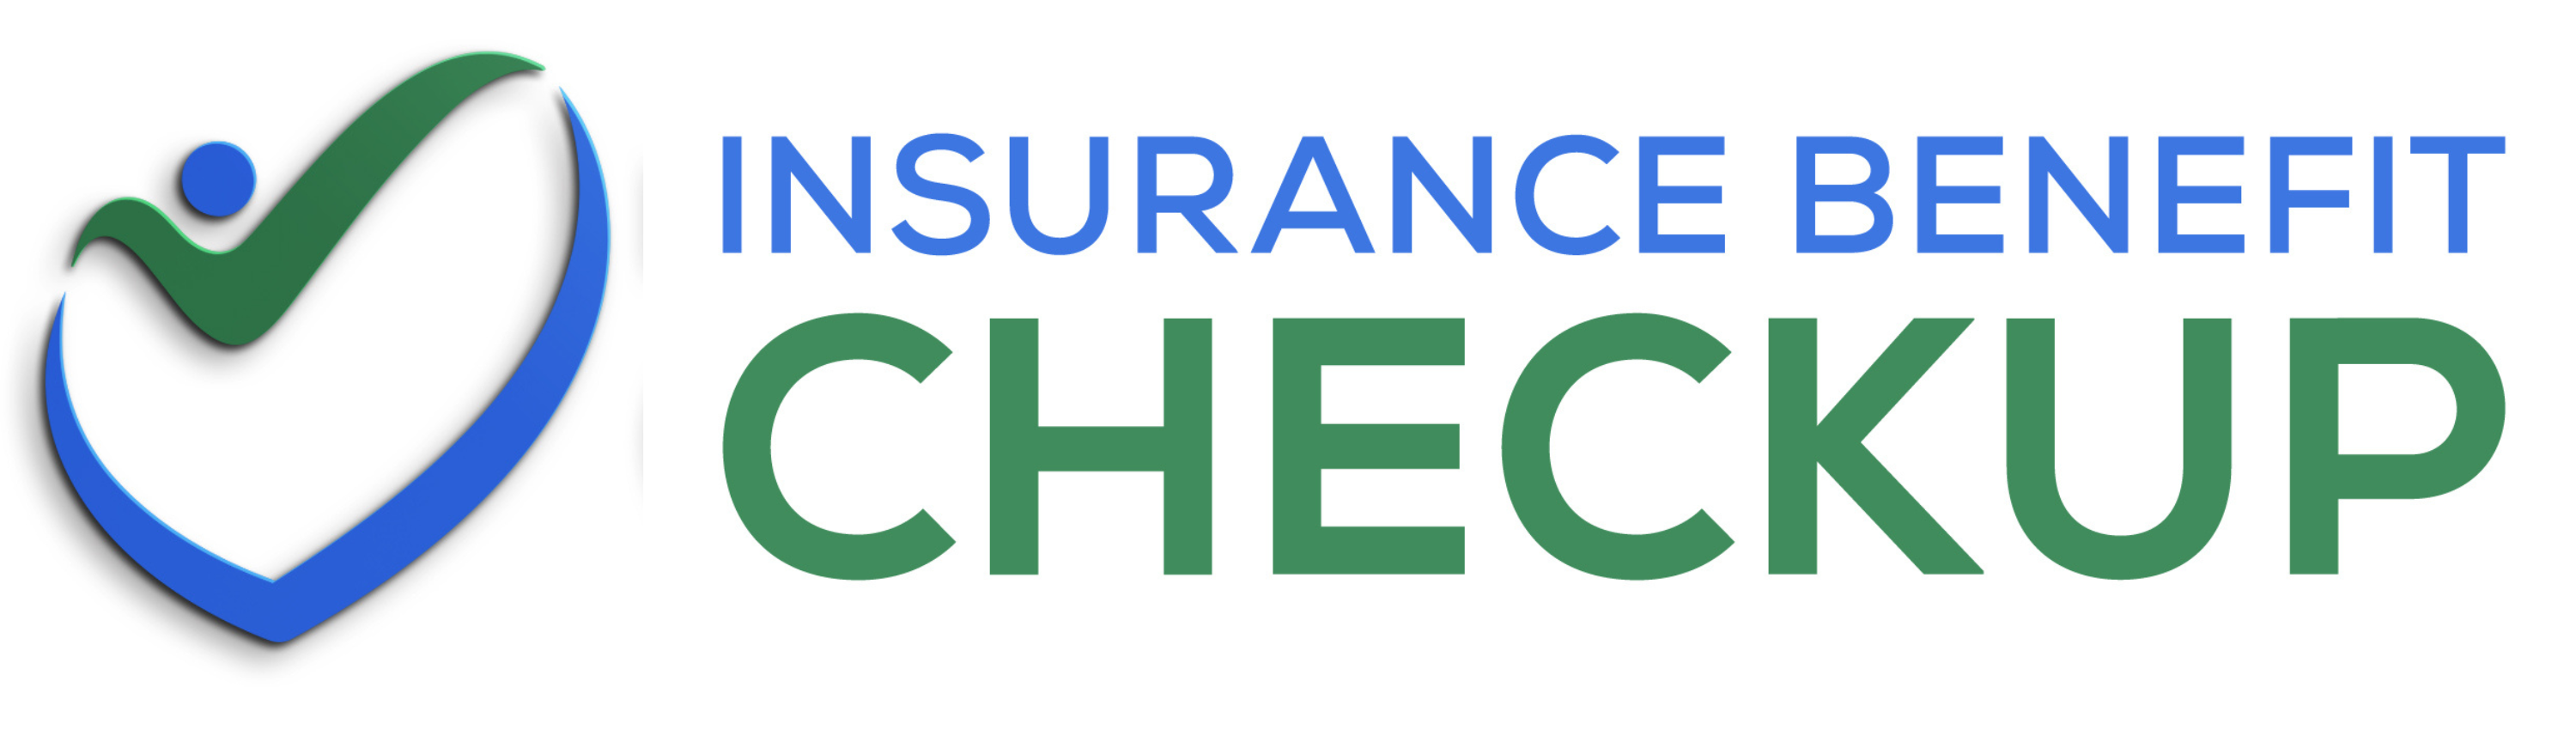 Insurance Benefit Checkup